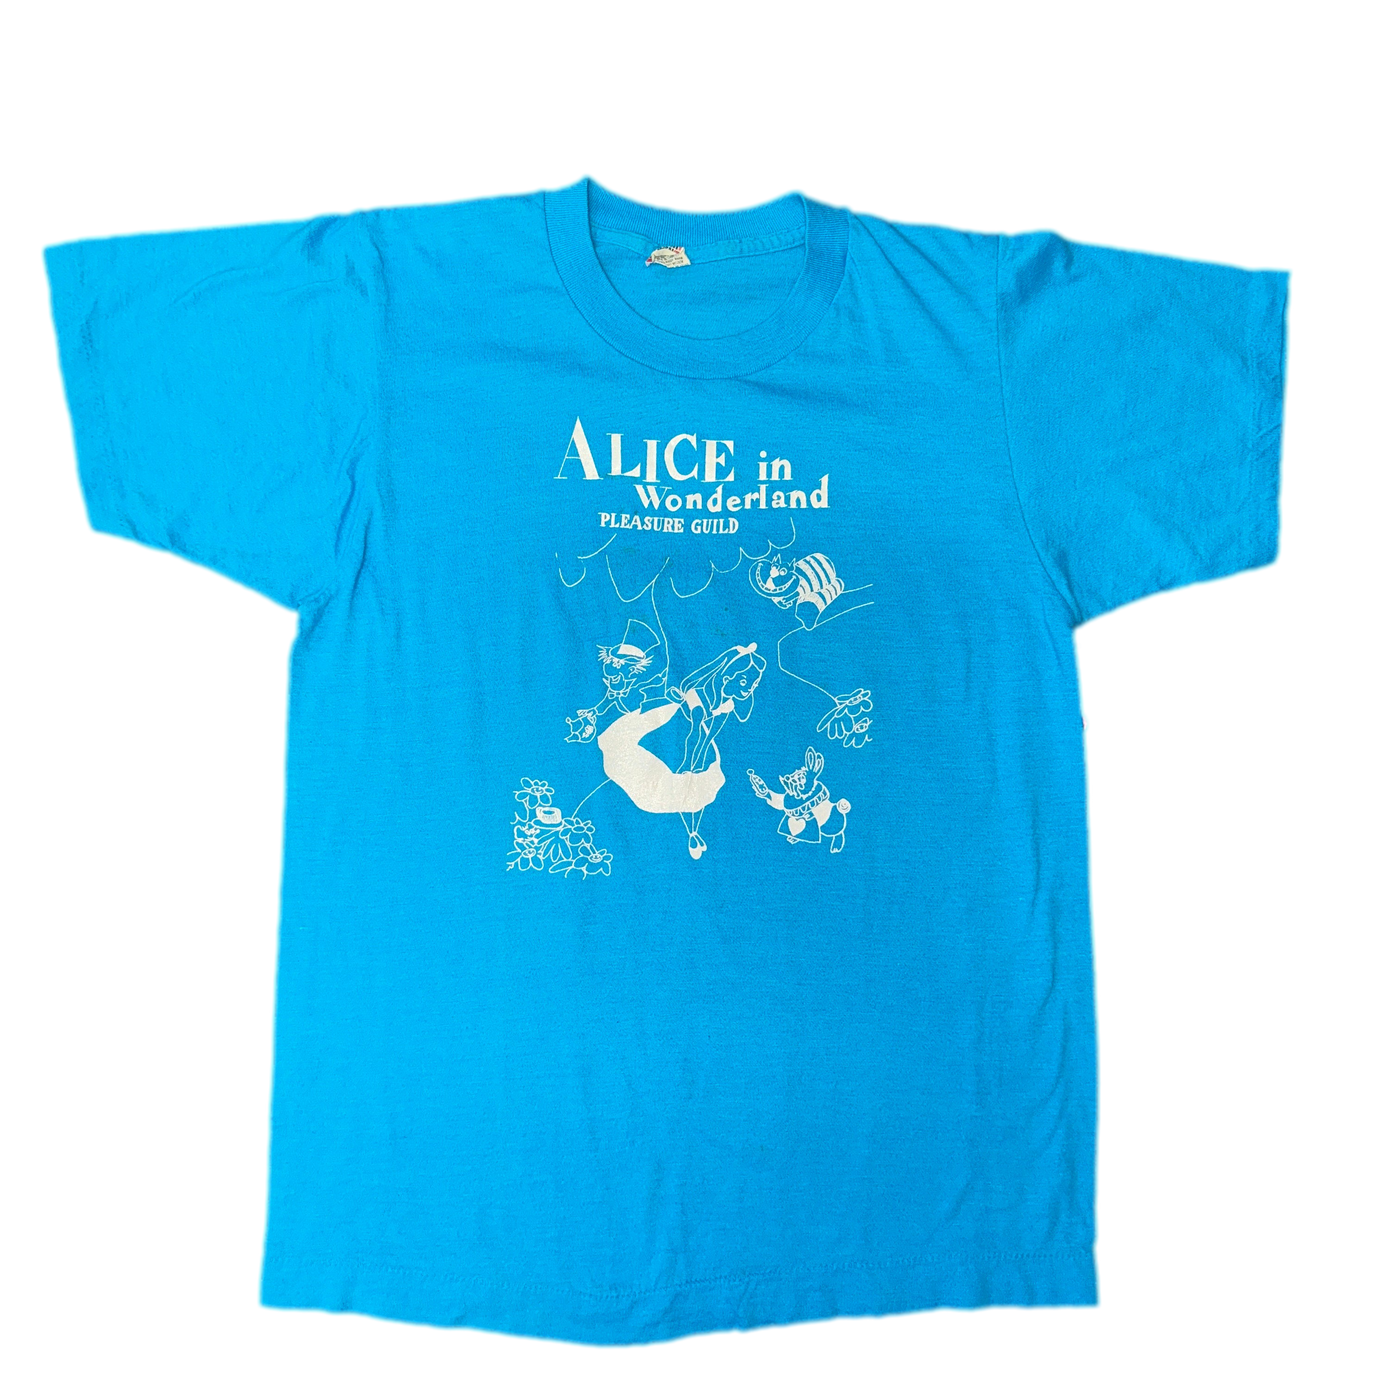 90's Alice in wonderland T-shirt sz S